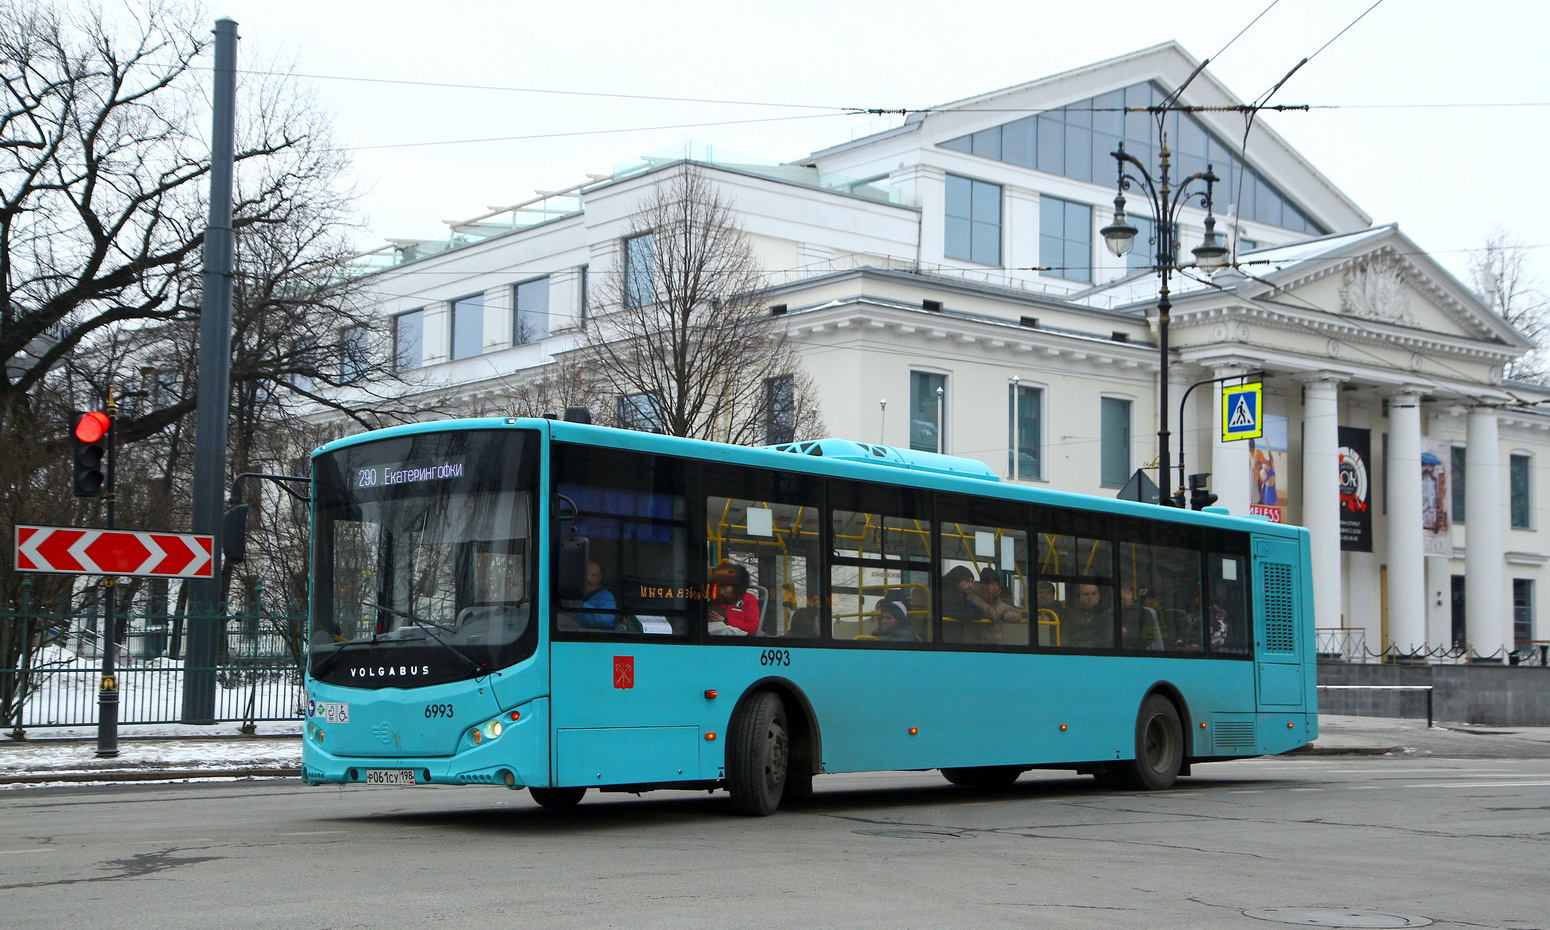 Saint Petersburg, Volgabus-5270.G2 (LNG) # 6993